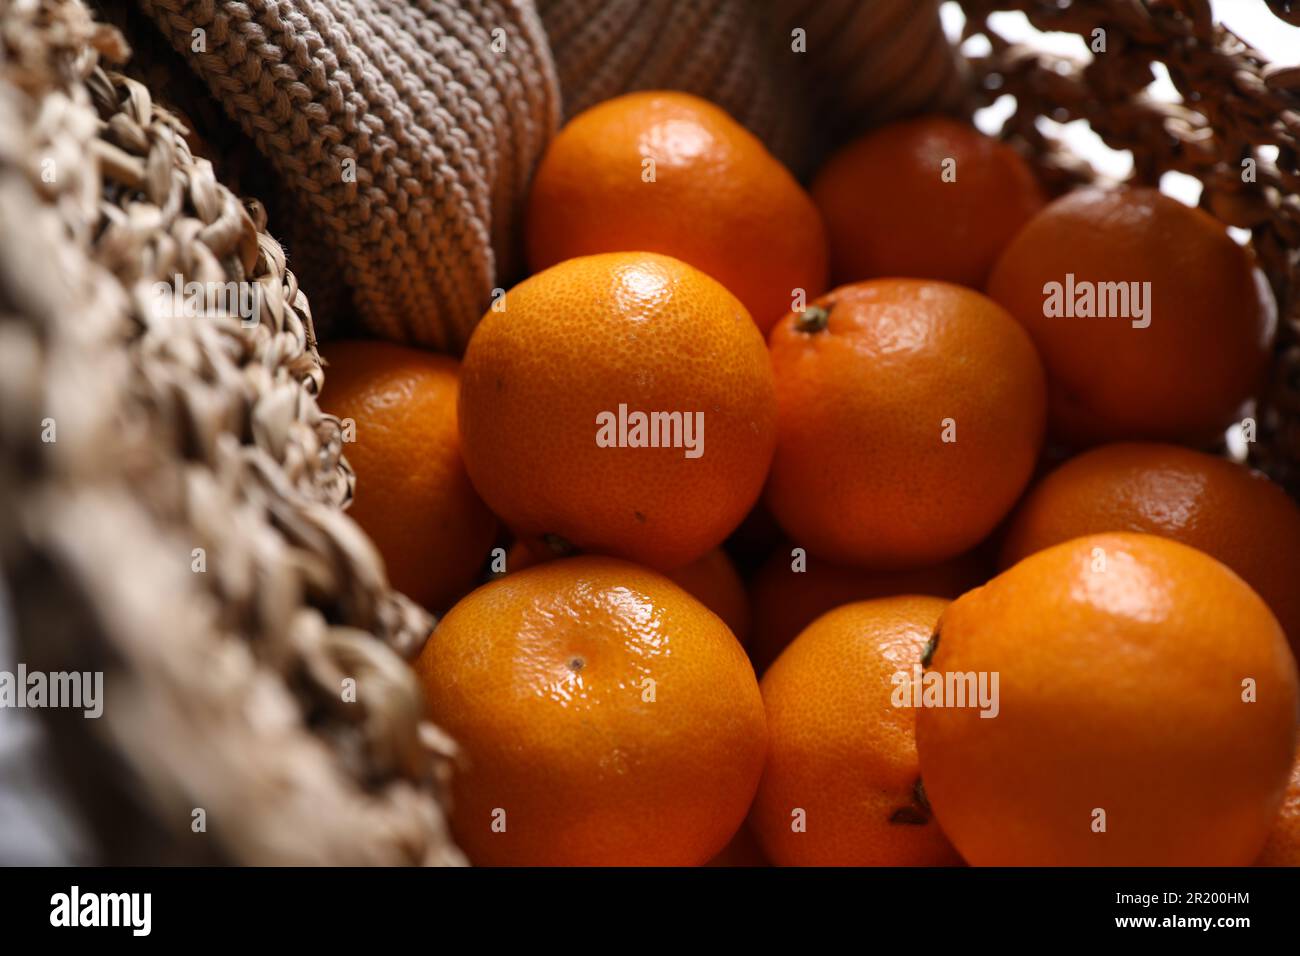 https://c8.alamy.com/comp/2R200HM/net-bag-with-many-fresh-ripe-tangerines-closeup-2R200HM.jpg